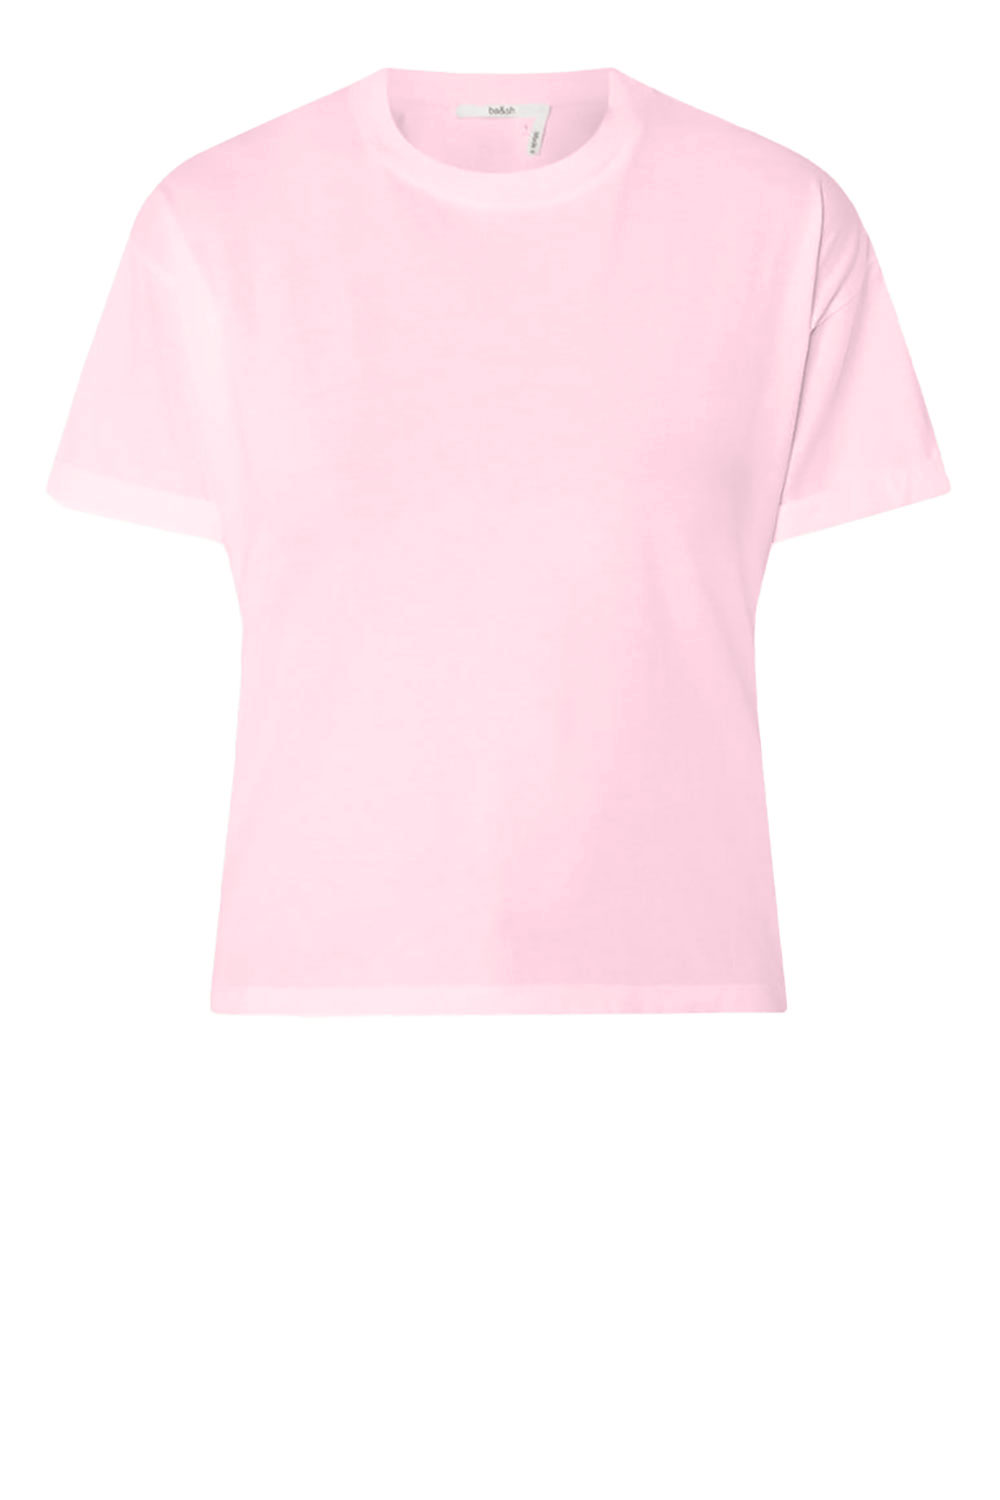 BA&SH T-shirt Rosie roze